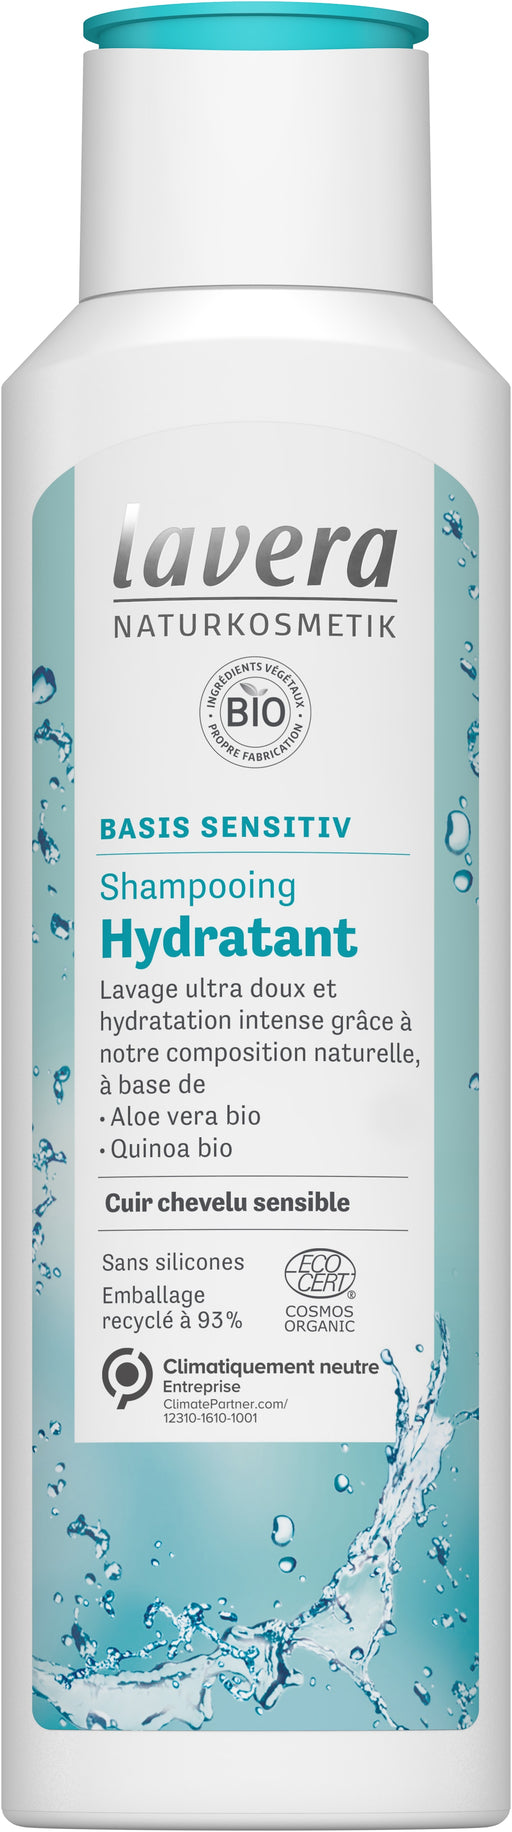 Basis Sensitiv Shampooing Hydratant